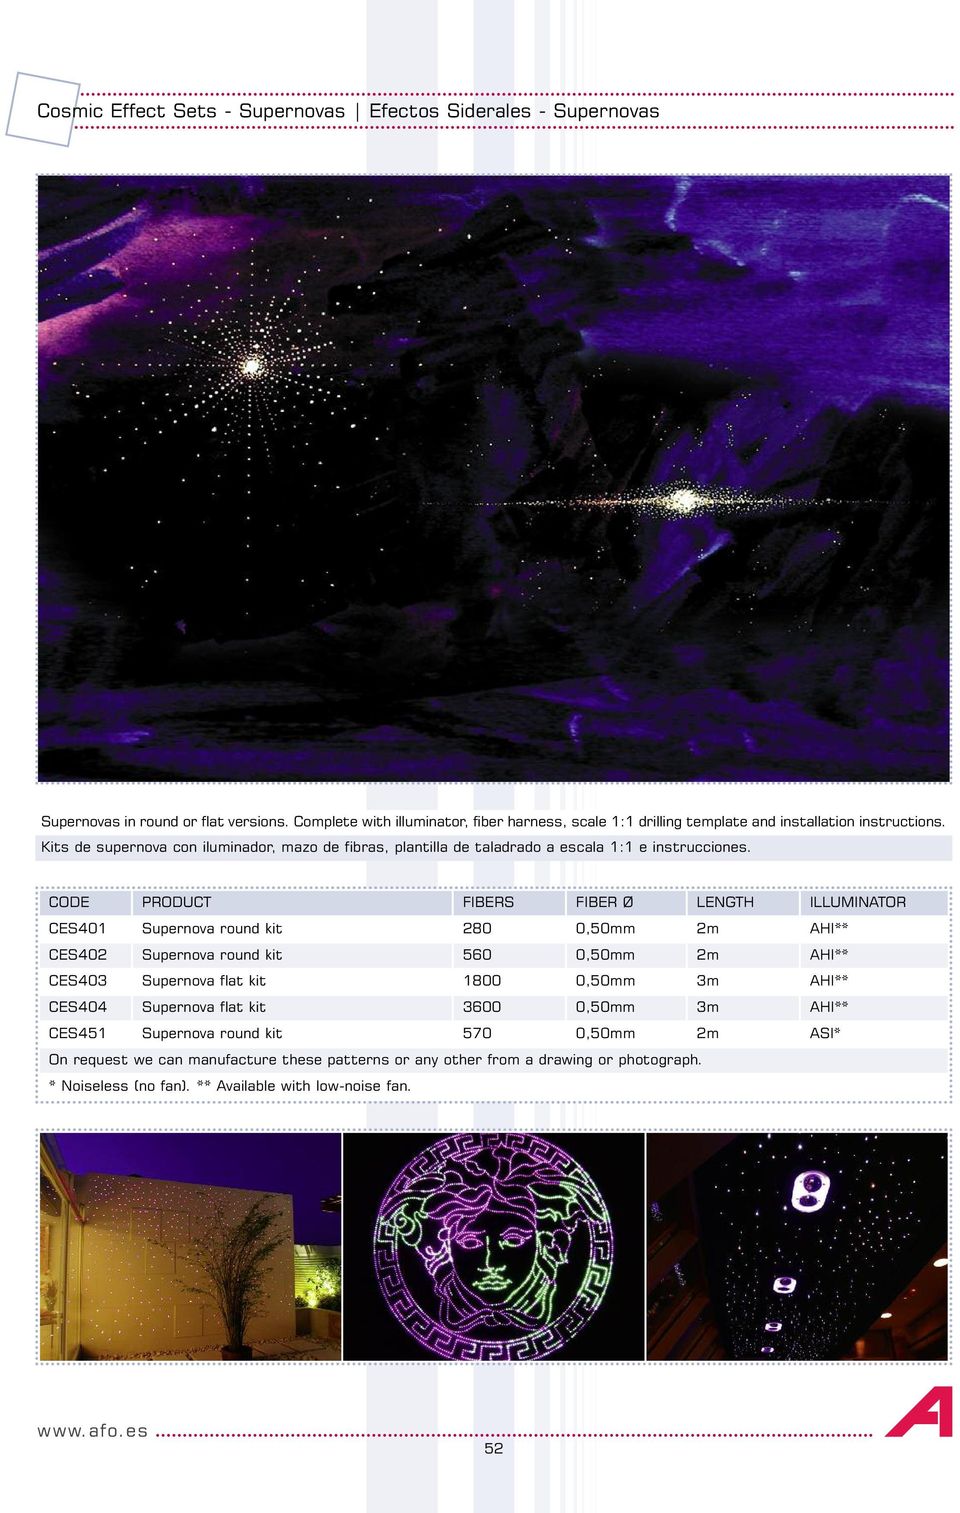 Kits de supernova con iluminador, mazo de fibras, plantilla de taladrado a escala 1:1 e instrucciones.